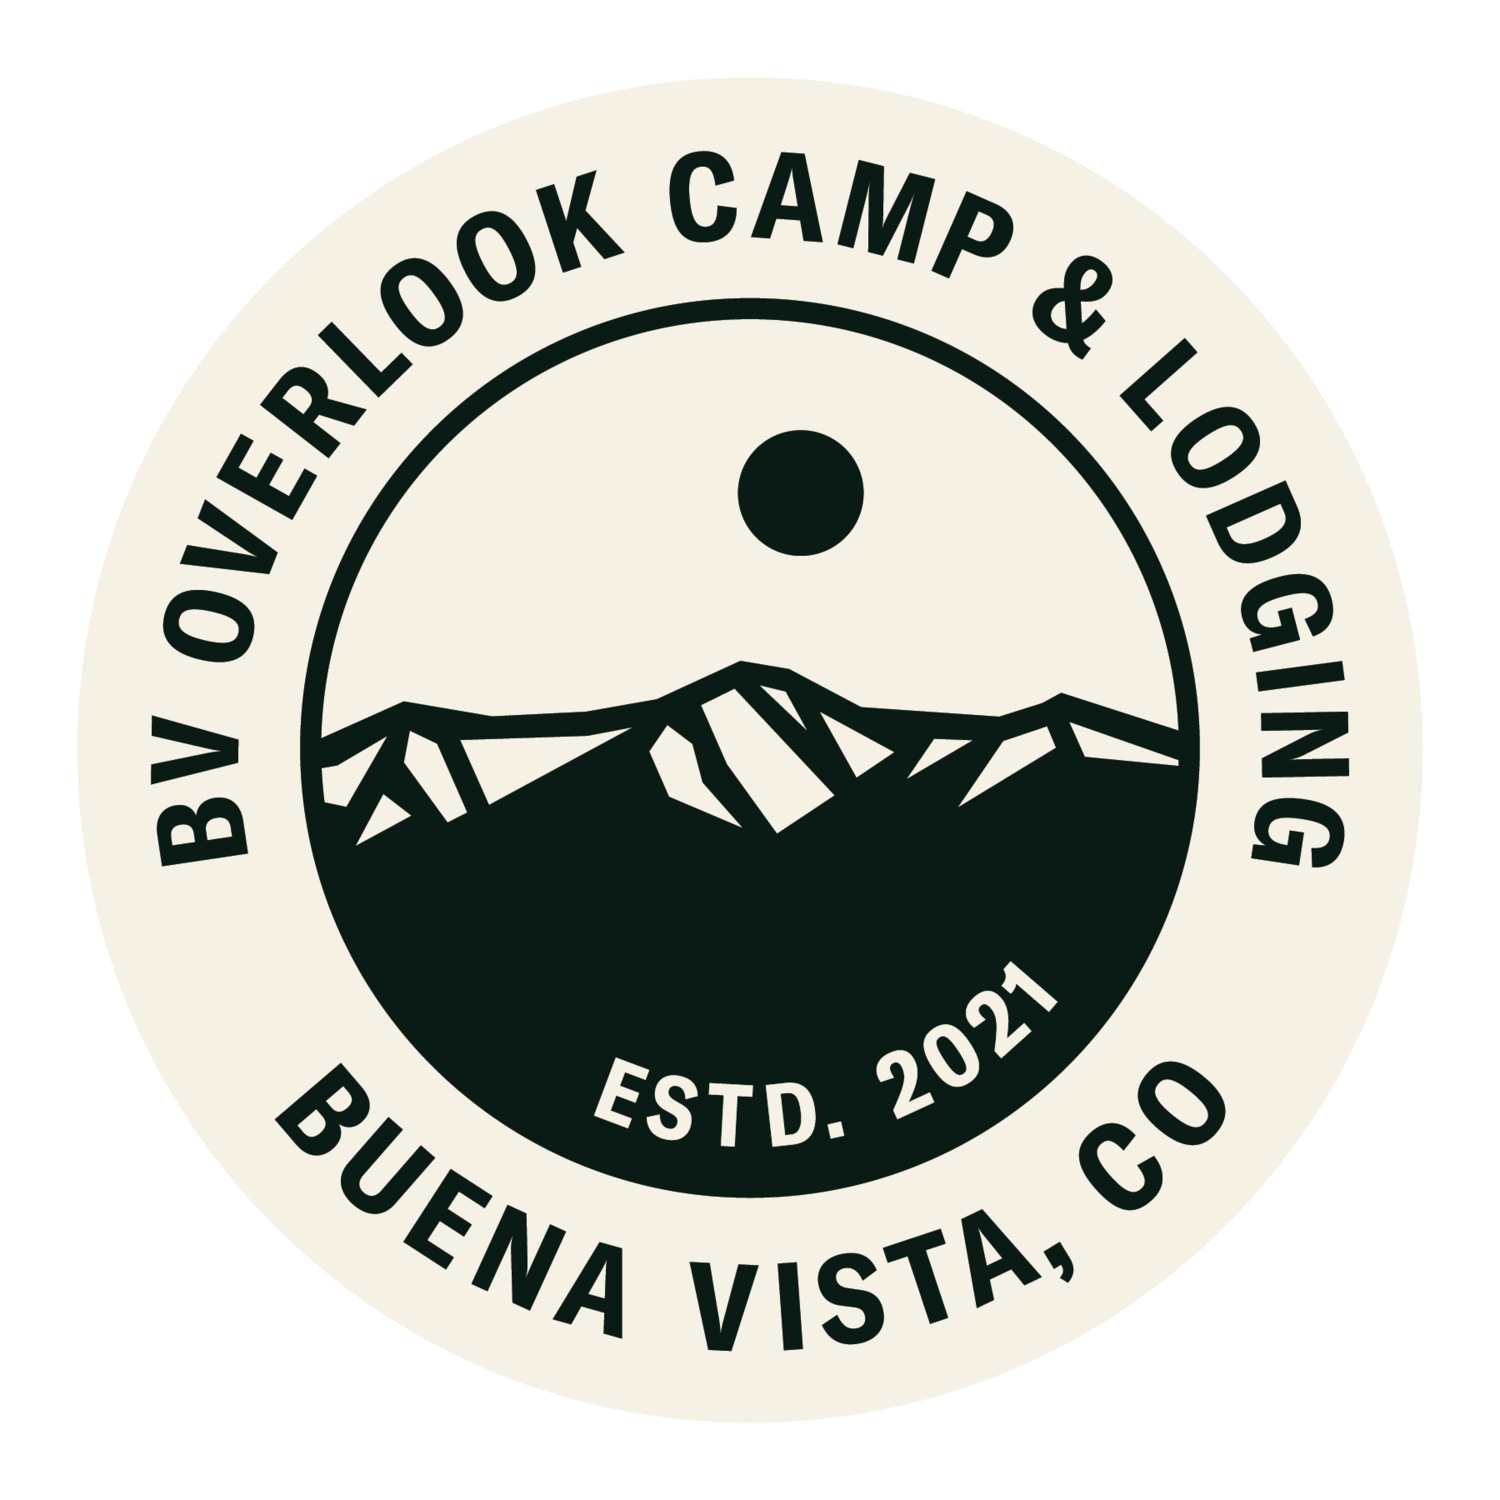 BV Overlook Camp & Lodging logo